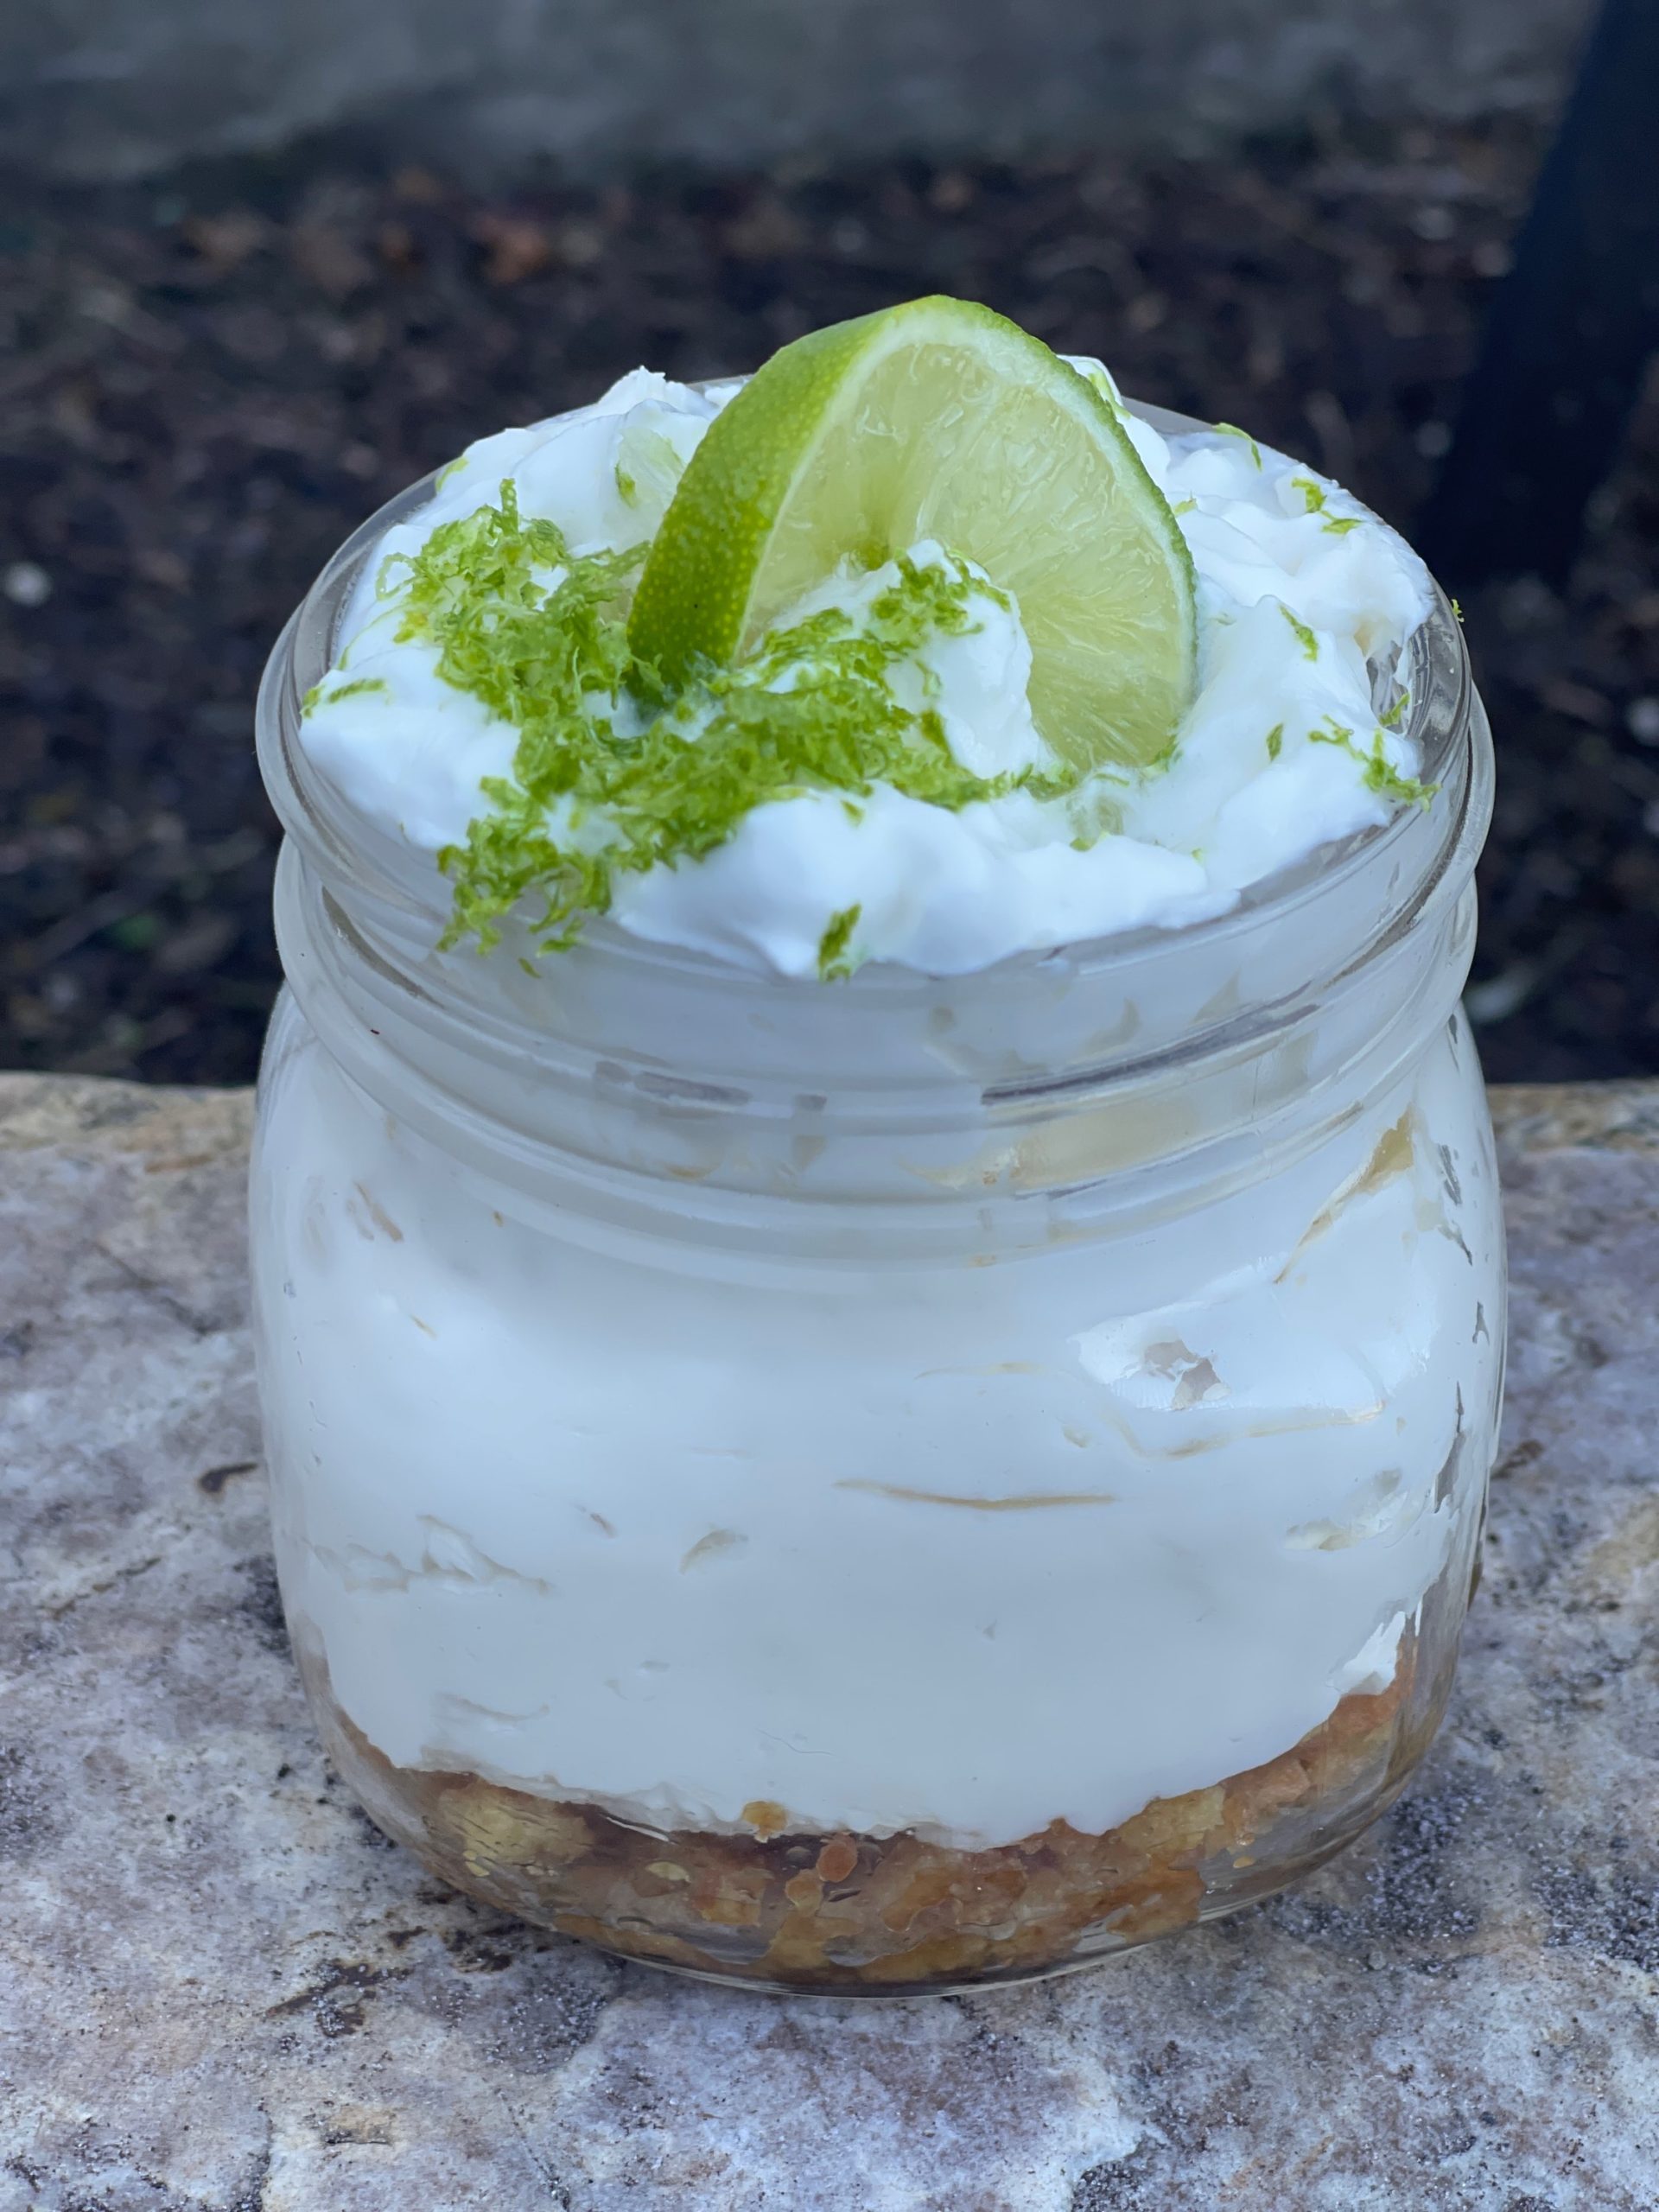 Key Lime Pie in a Jar